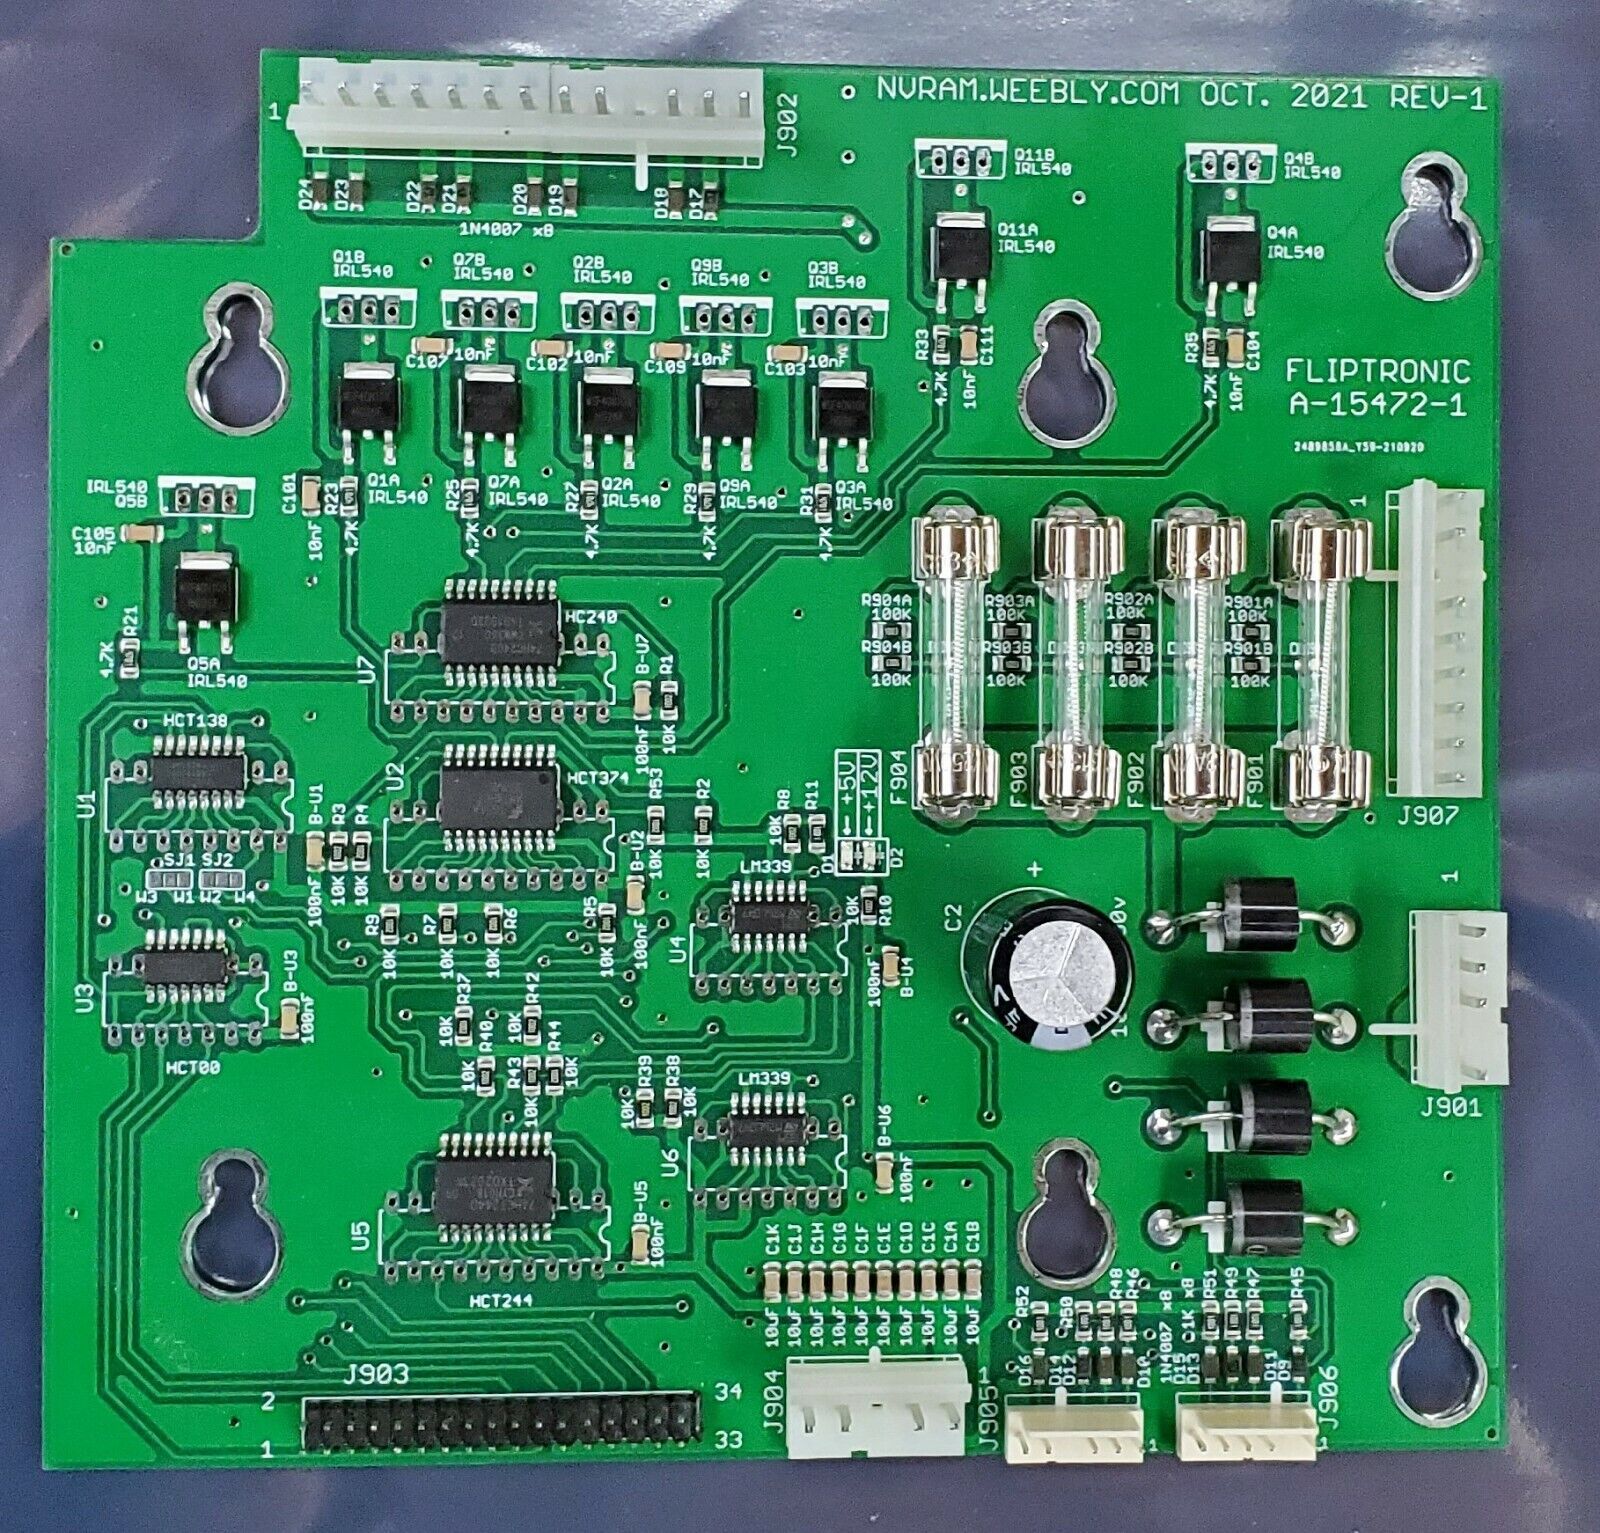 NEW Bally - Williams Fliptronic A-15472-1 Circuit Board